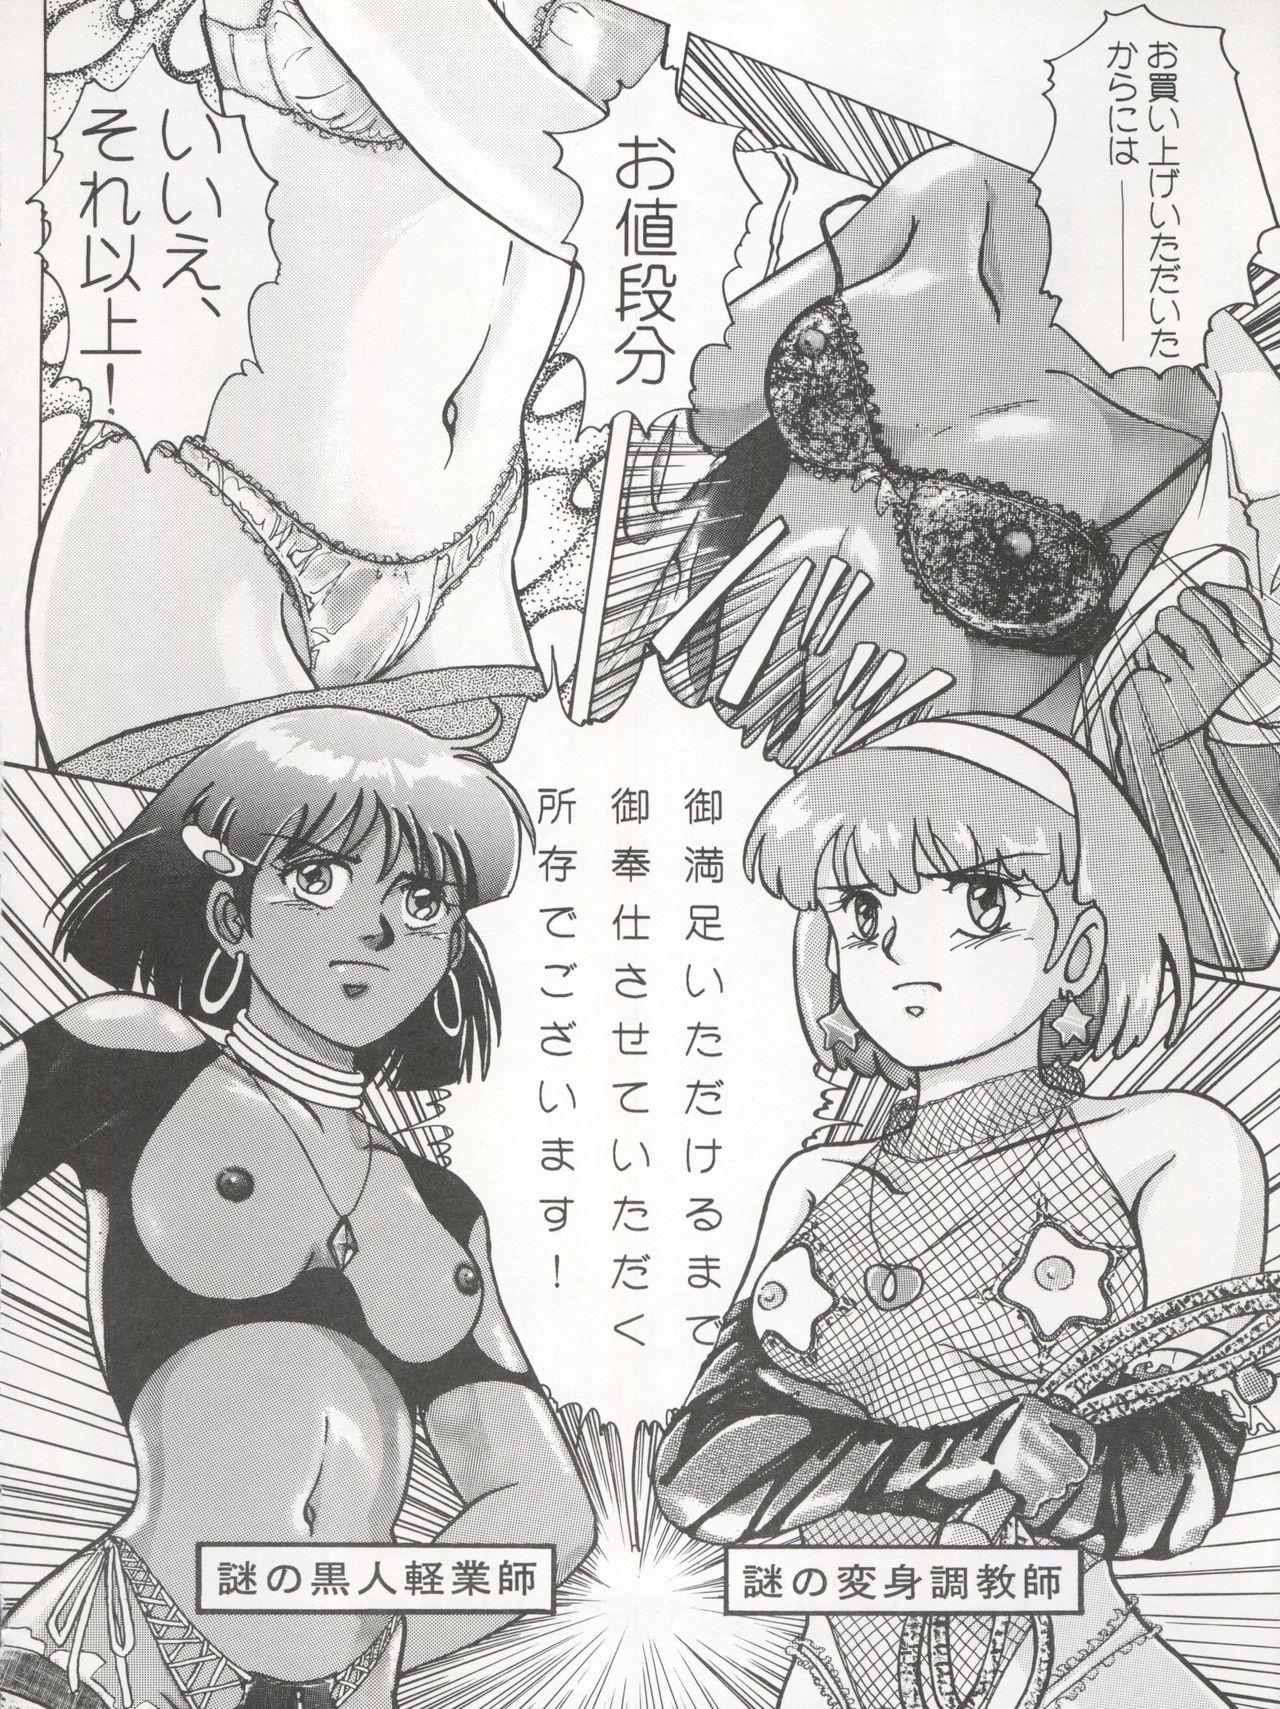 Blow Job Contest 逮捕されちゃうぞ - Fushigi no umi no nadia Youre under arrest Minky momo 3x3 eyes Handsome - Page 4